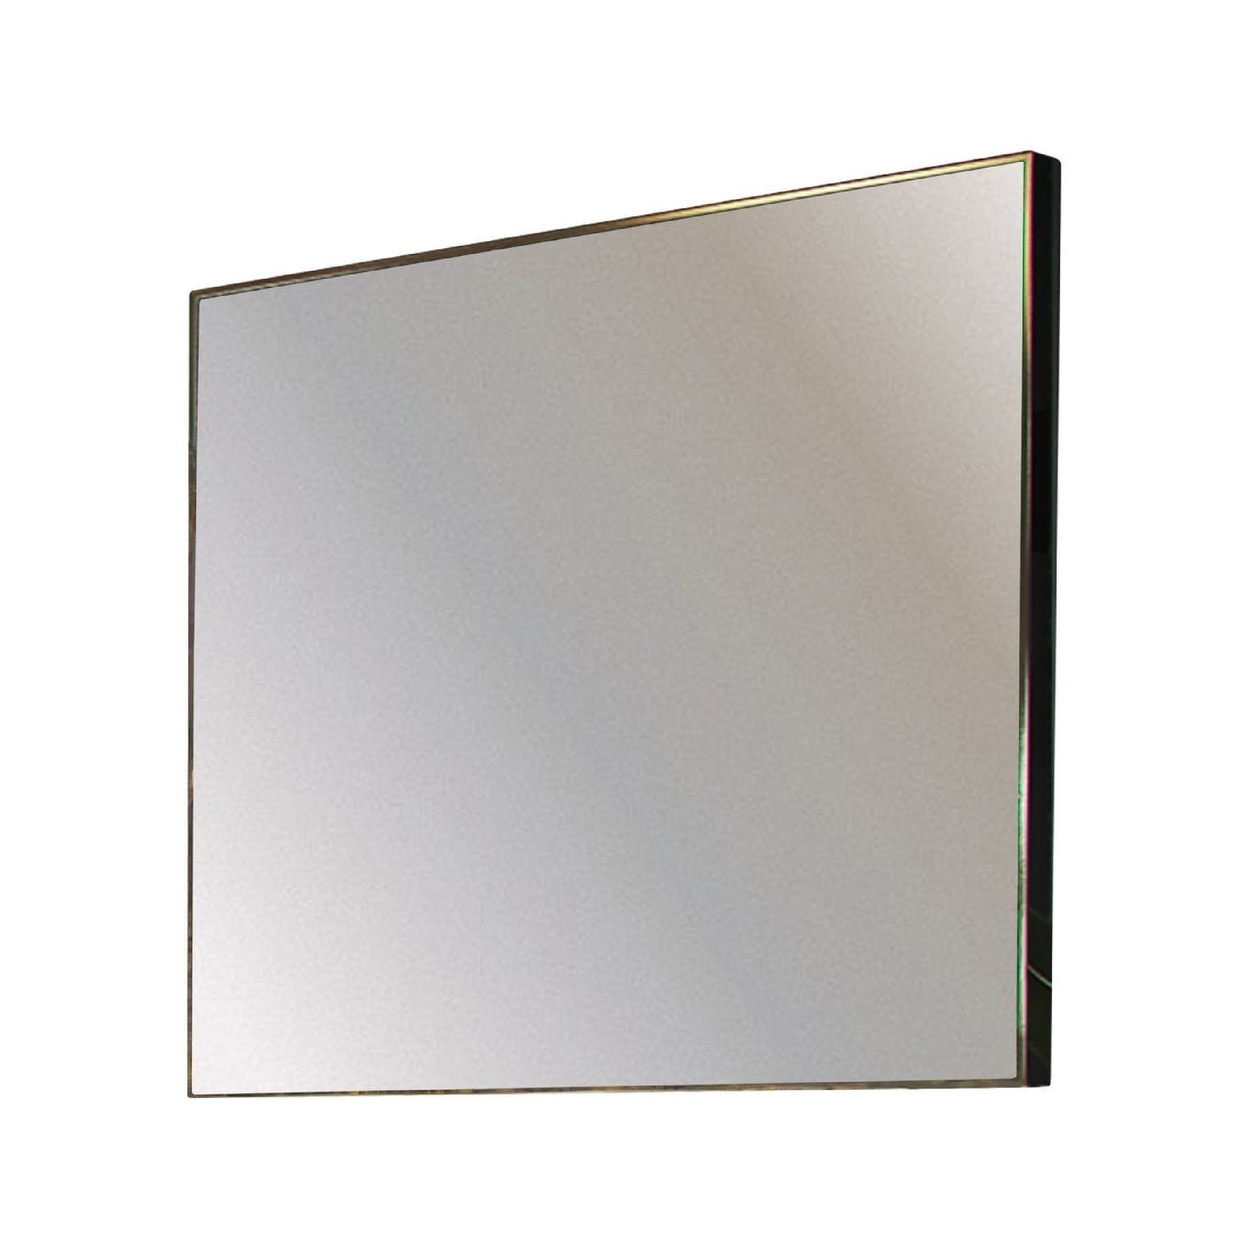 Cid Lue 32 Inch Square Mirror, Sleek Metal Frame, Landscape Orientation- Saltoro Sherpi